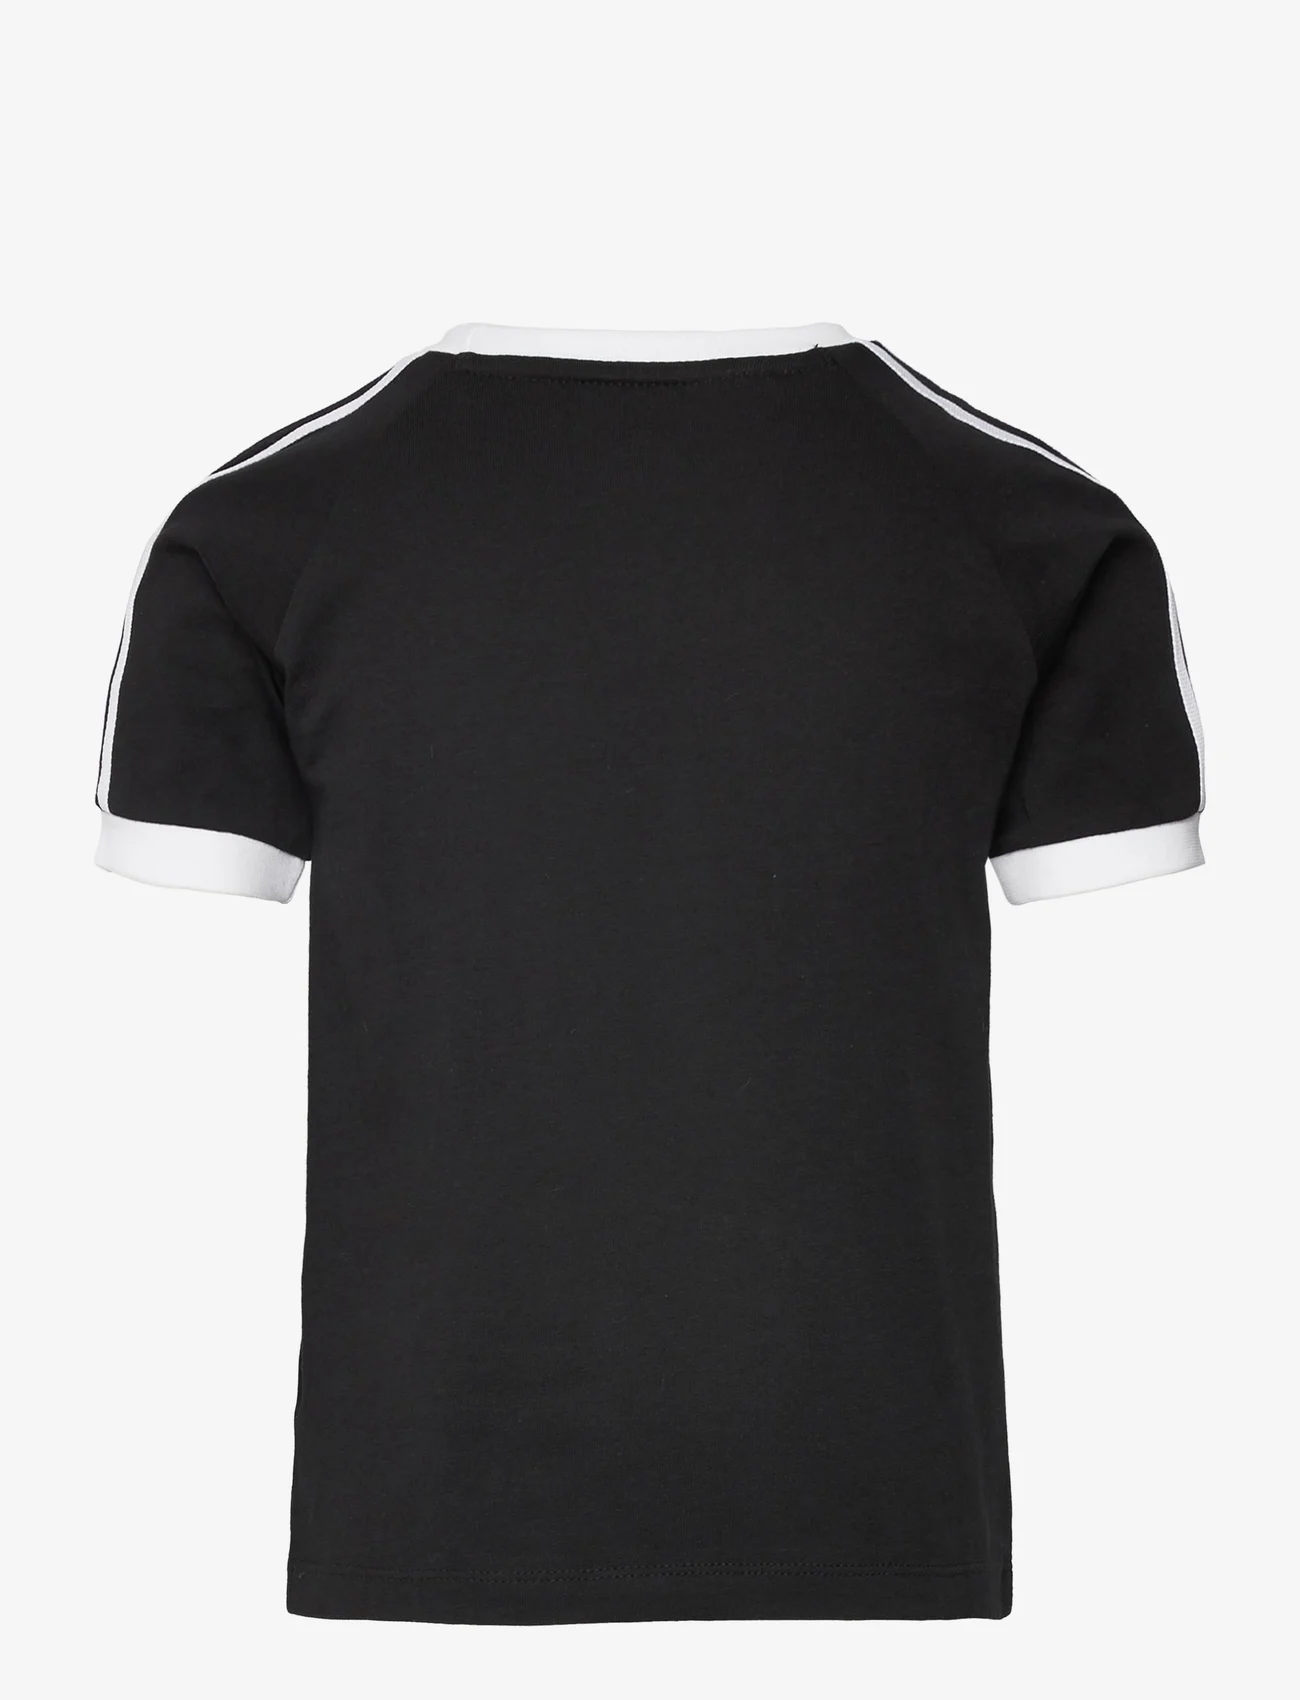 adidas Originals - 3STRIPES TEE - kortärmade t-shirts - black/white - 1